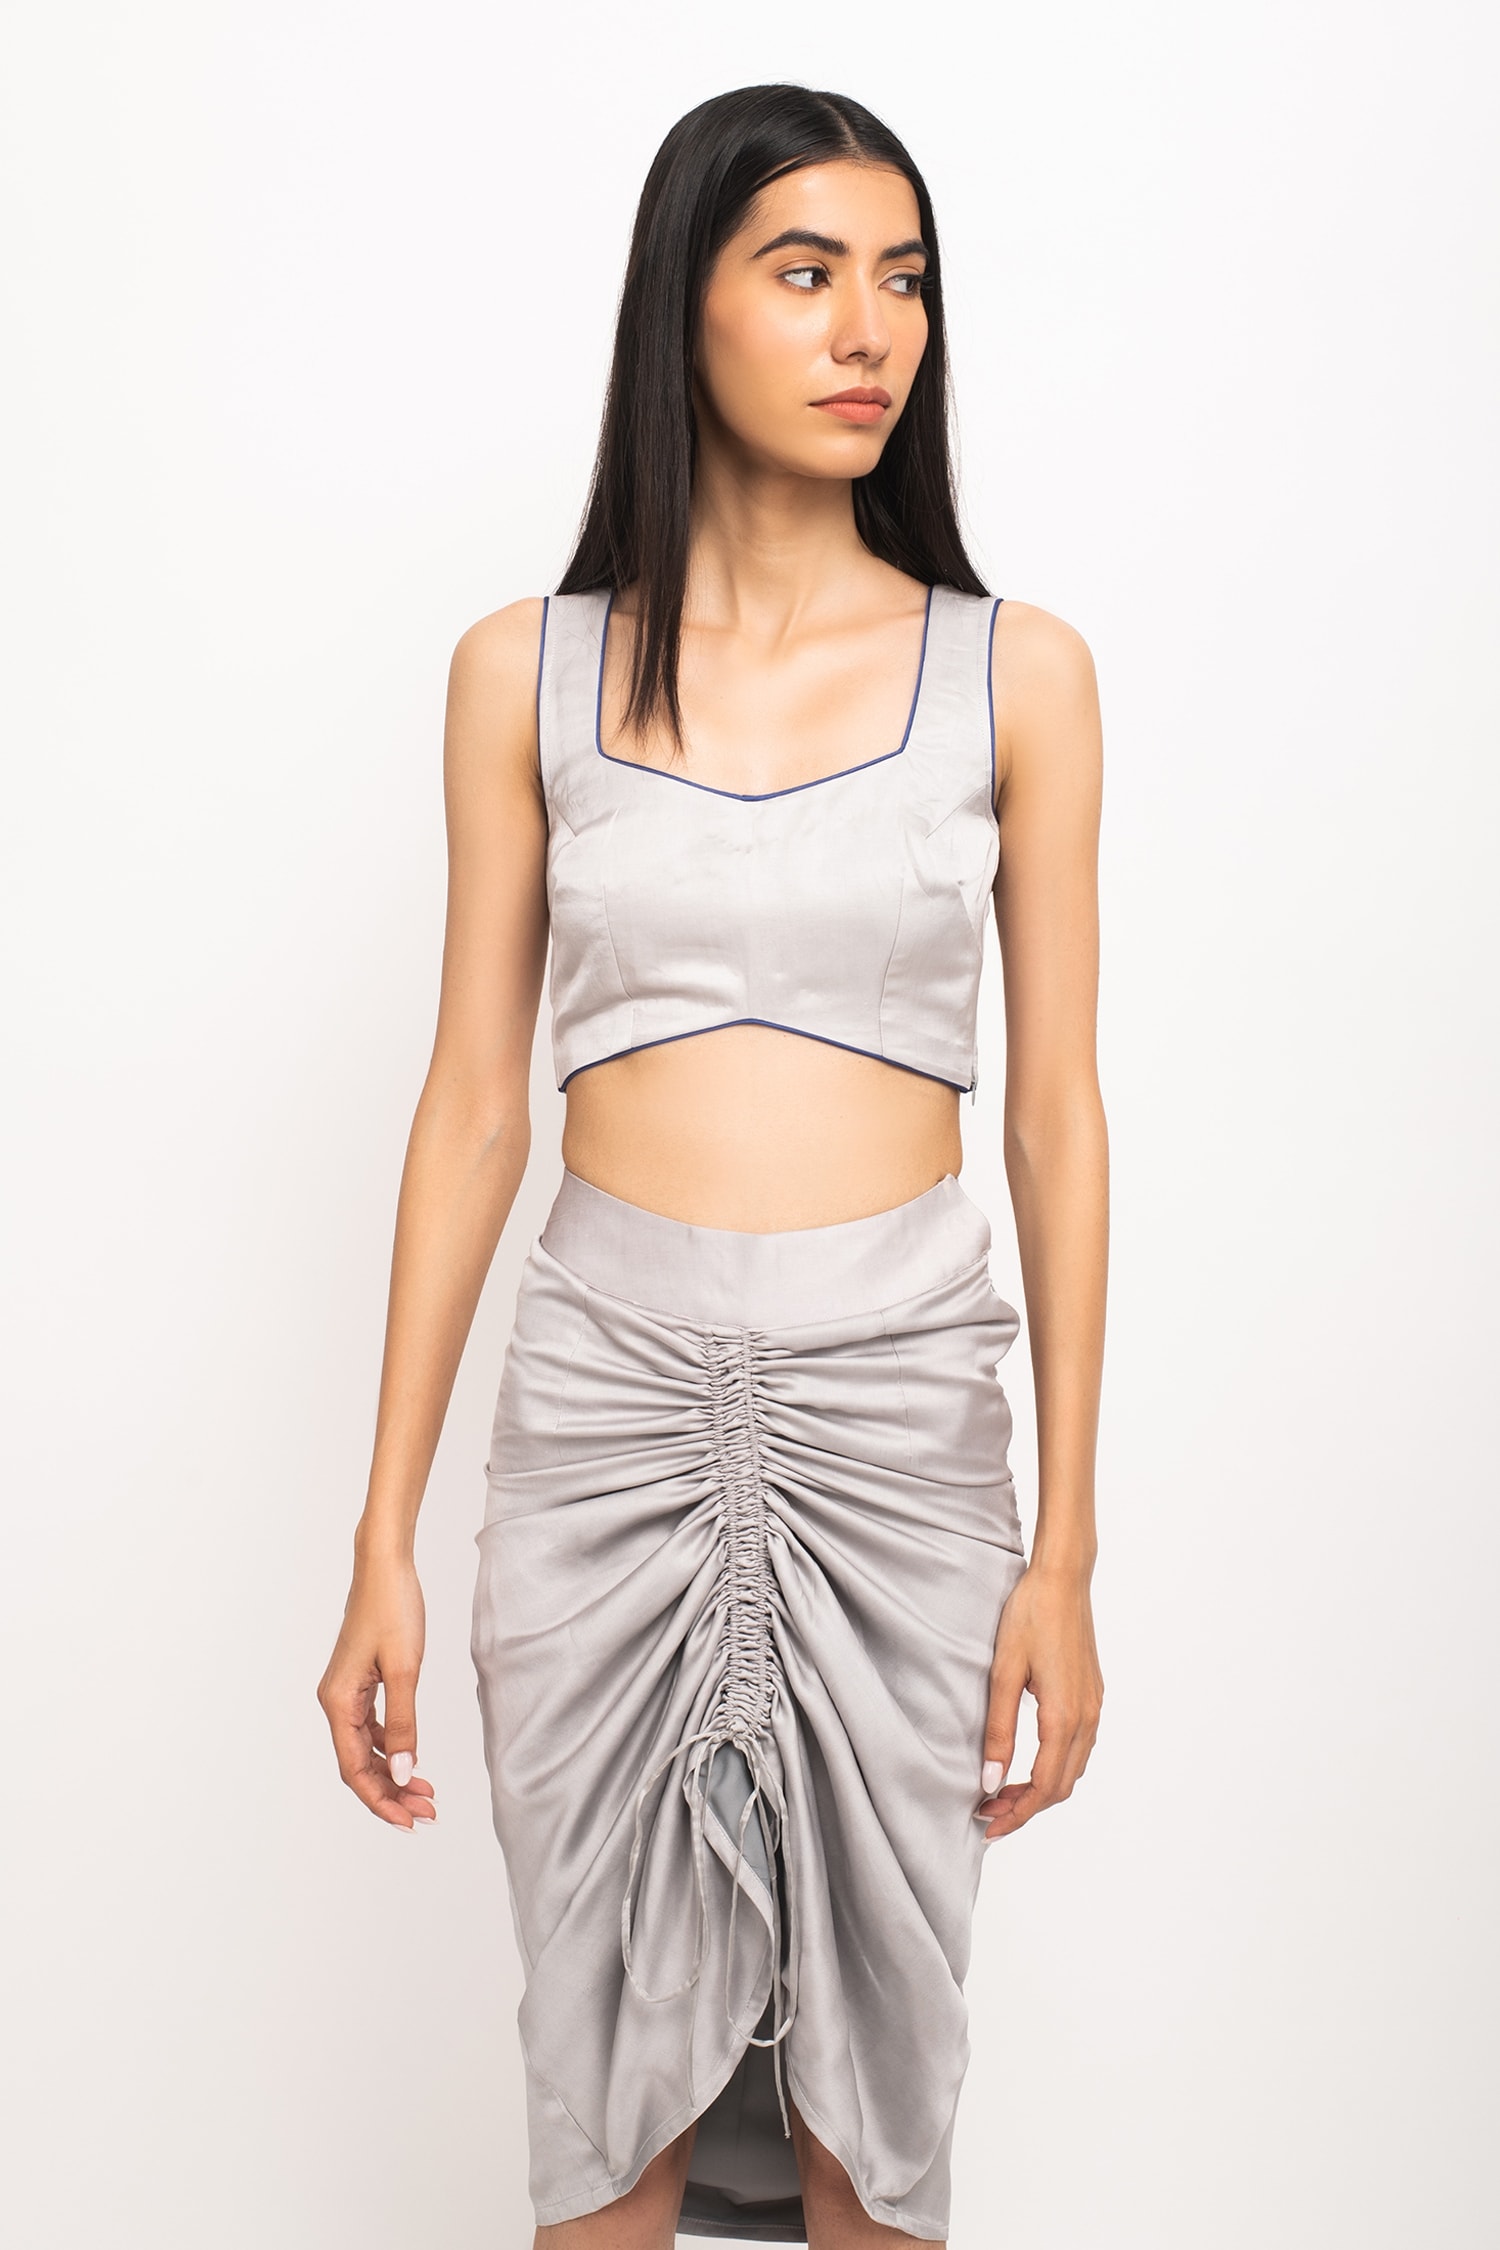 Neora By Nehal Chopra Bustier And Ruched Skirt Set, Grey, Sleeveless,  Bemberg Modal Silk, Square, Sleeveless